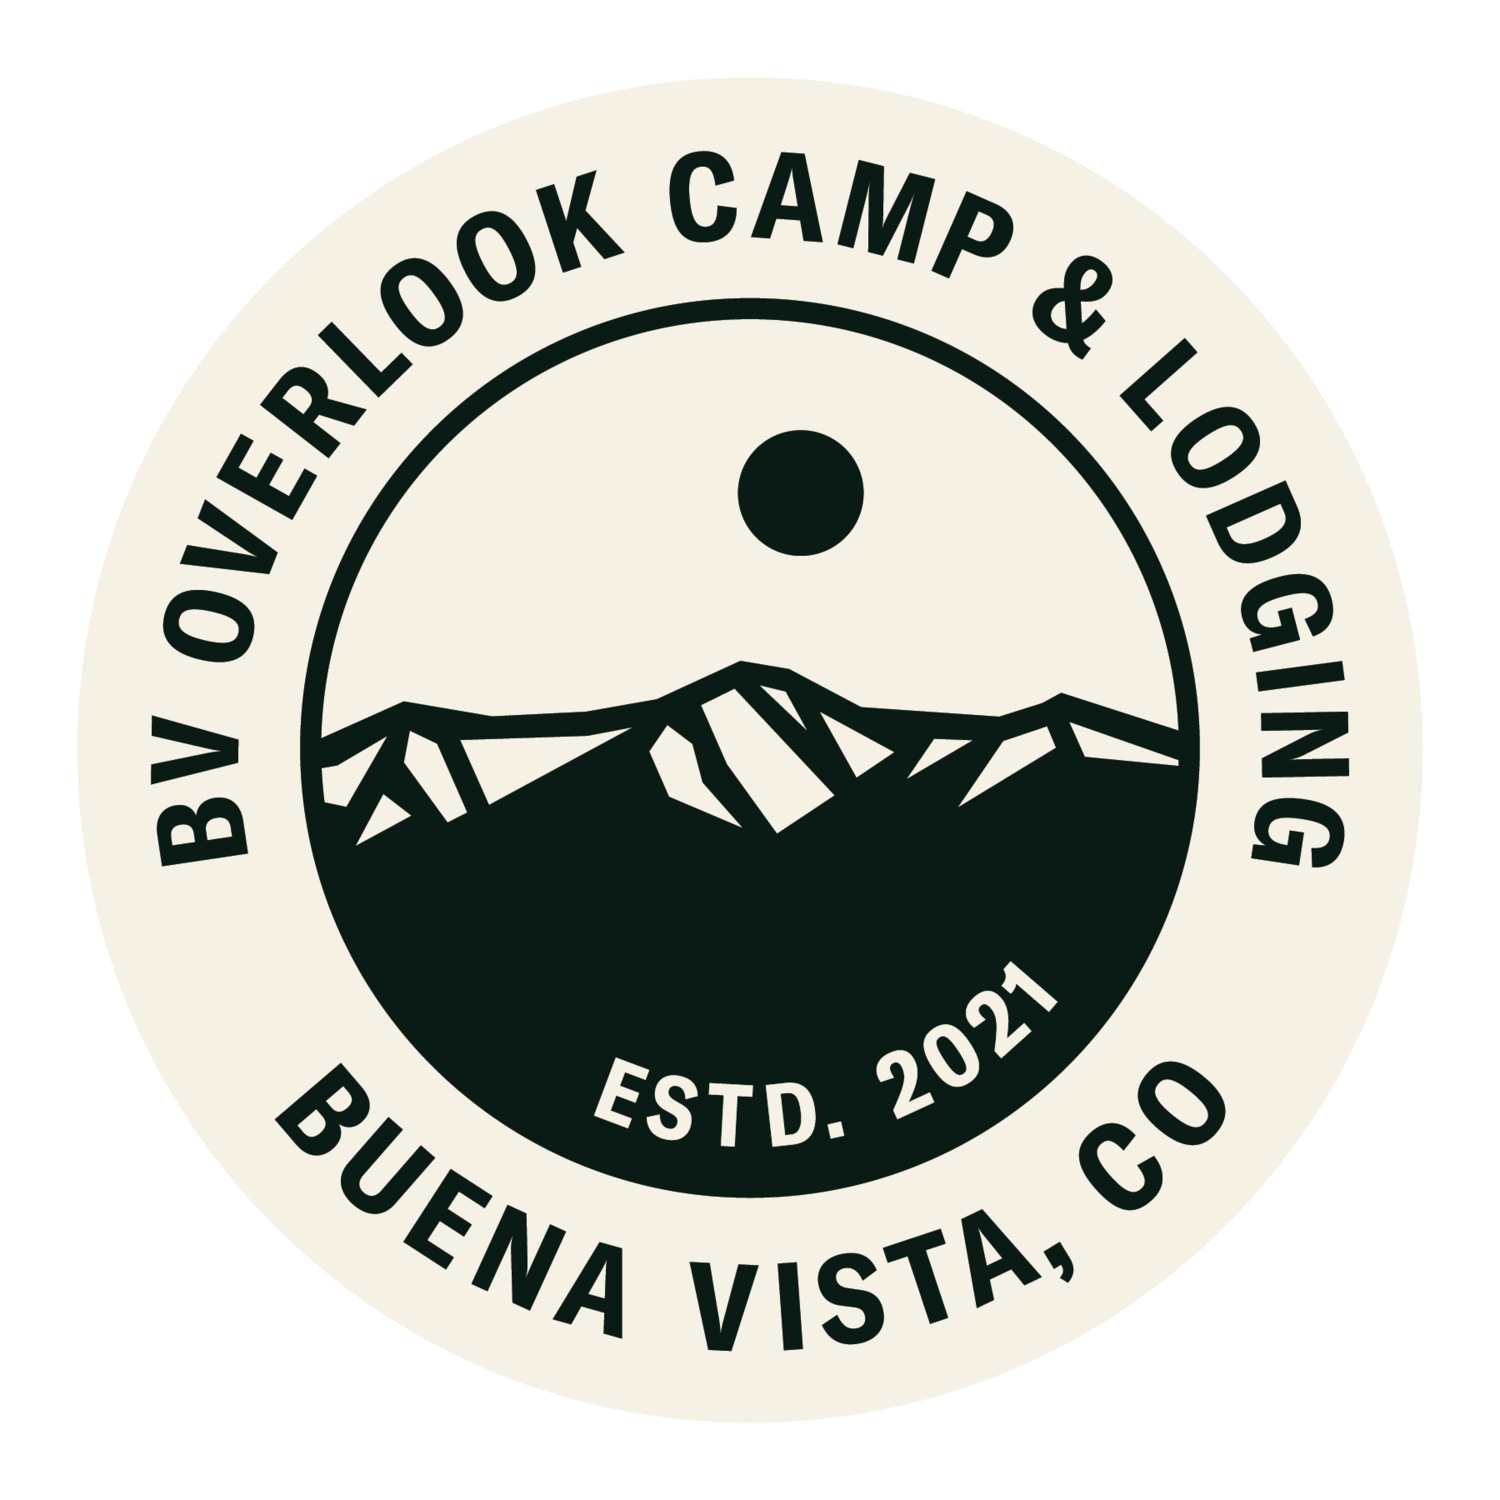 BV Overlook Camp & Lodging